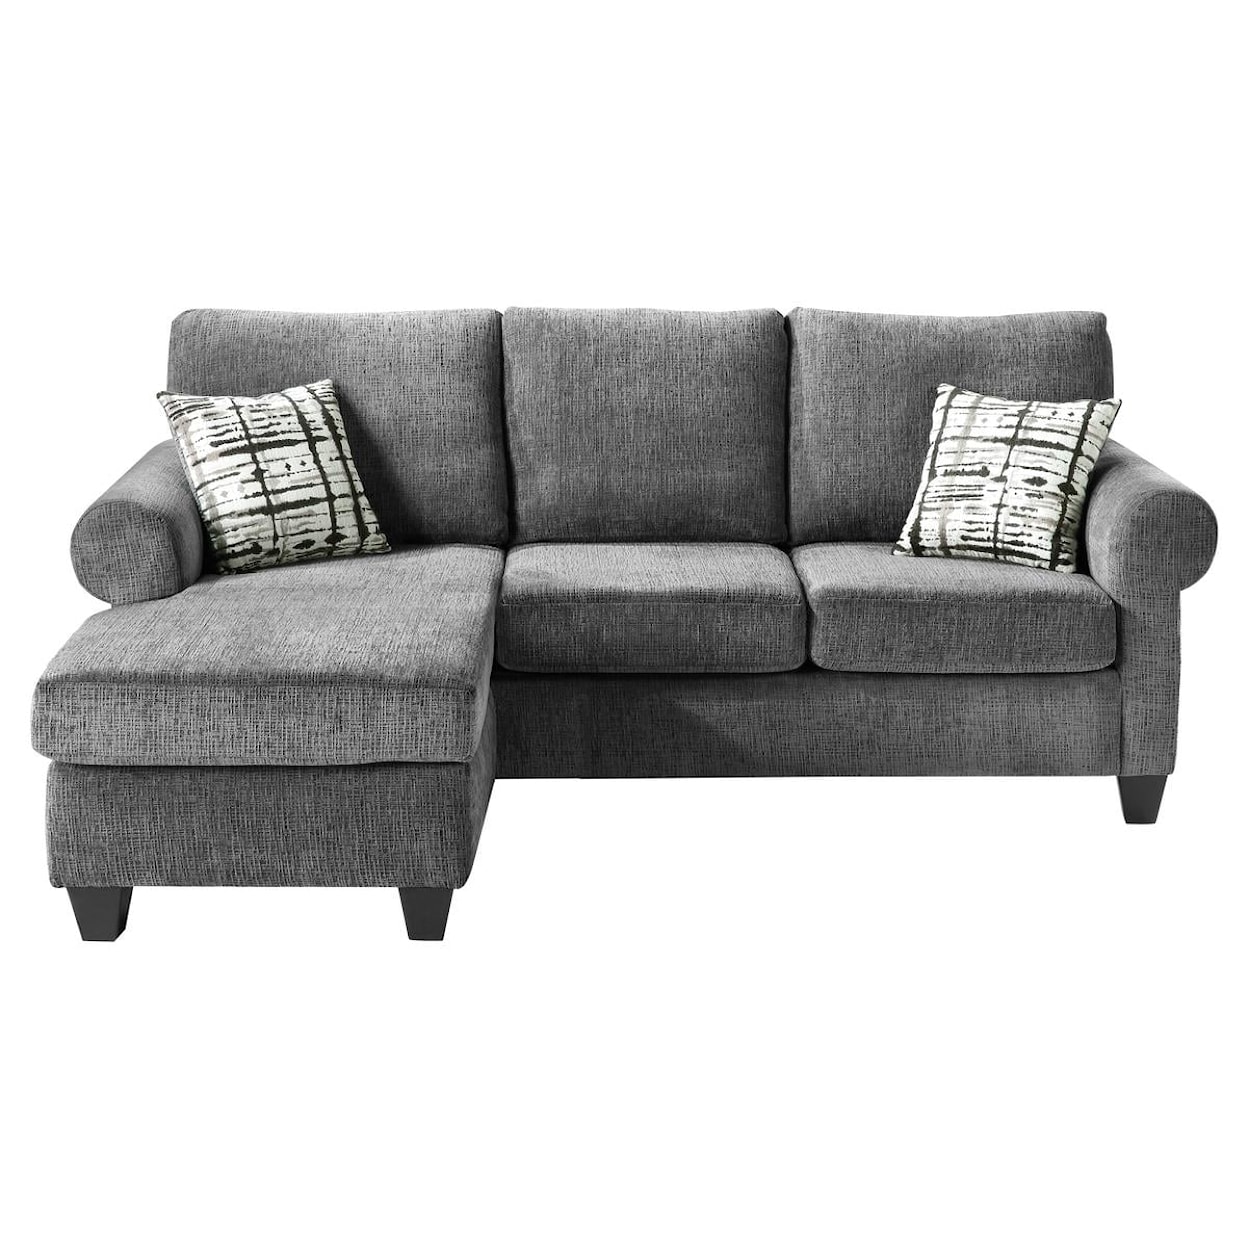 Homelegance Desboro Reversible Sofa Chaise